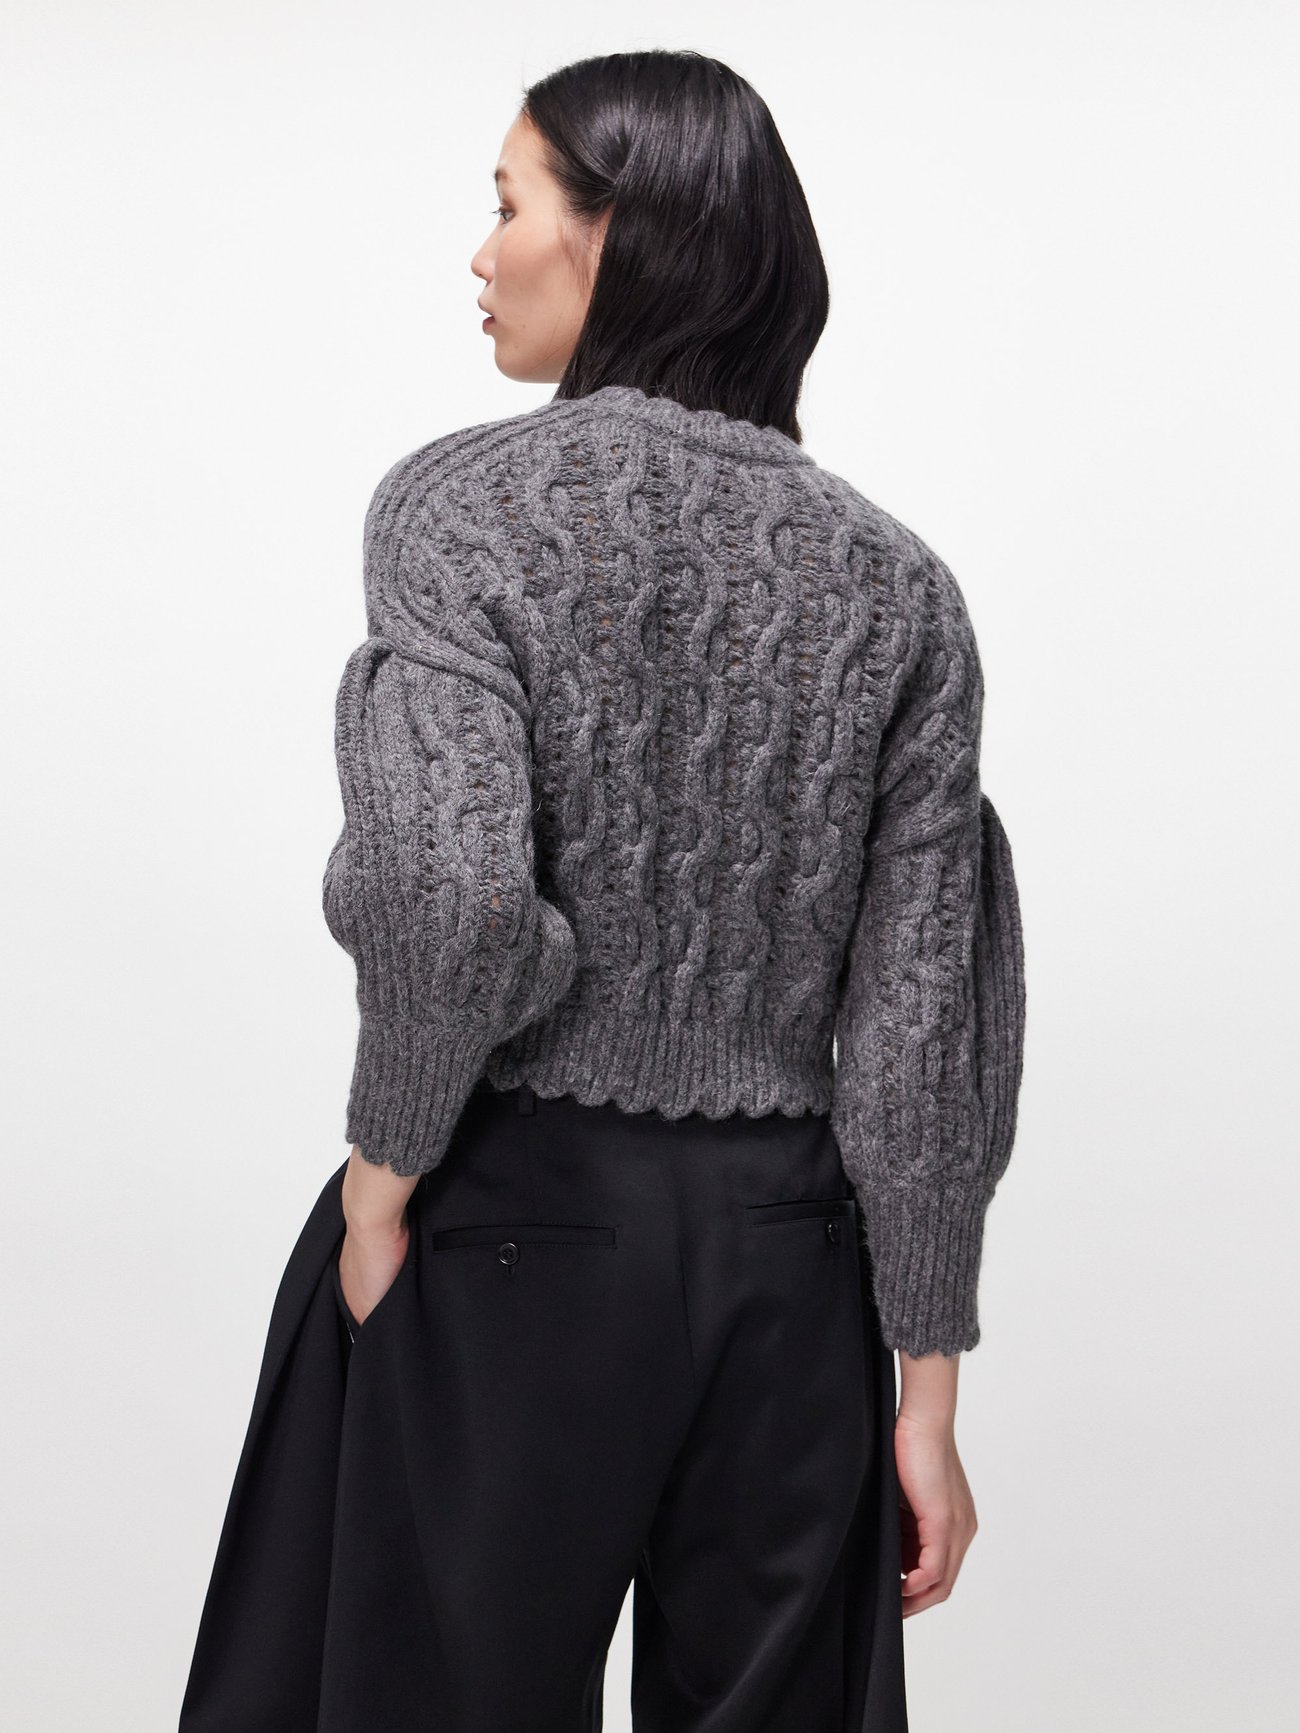 Luxe Legging + Croppped Sweater Set – shopgsimone